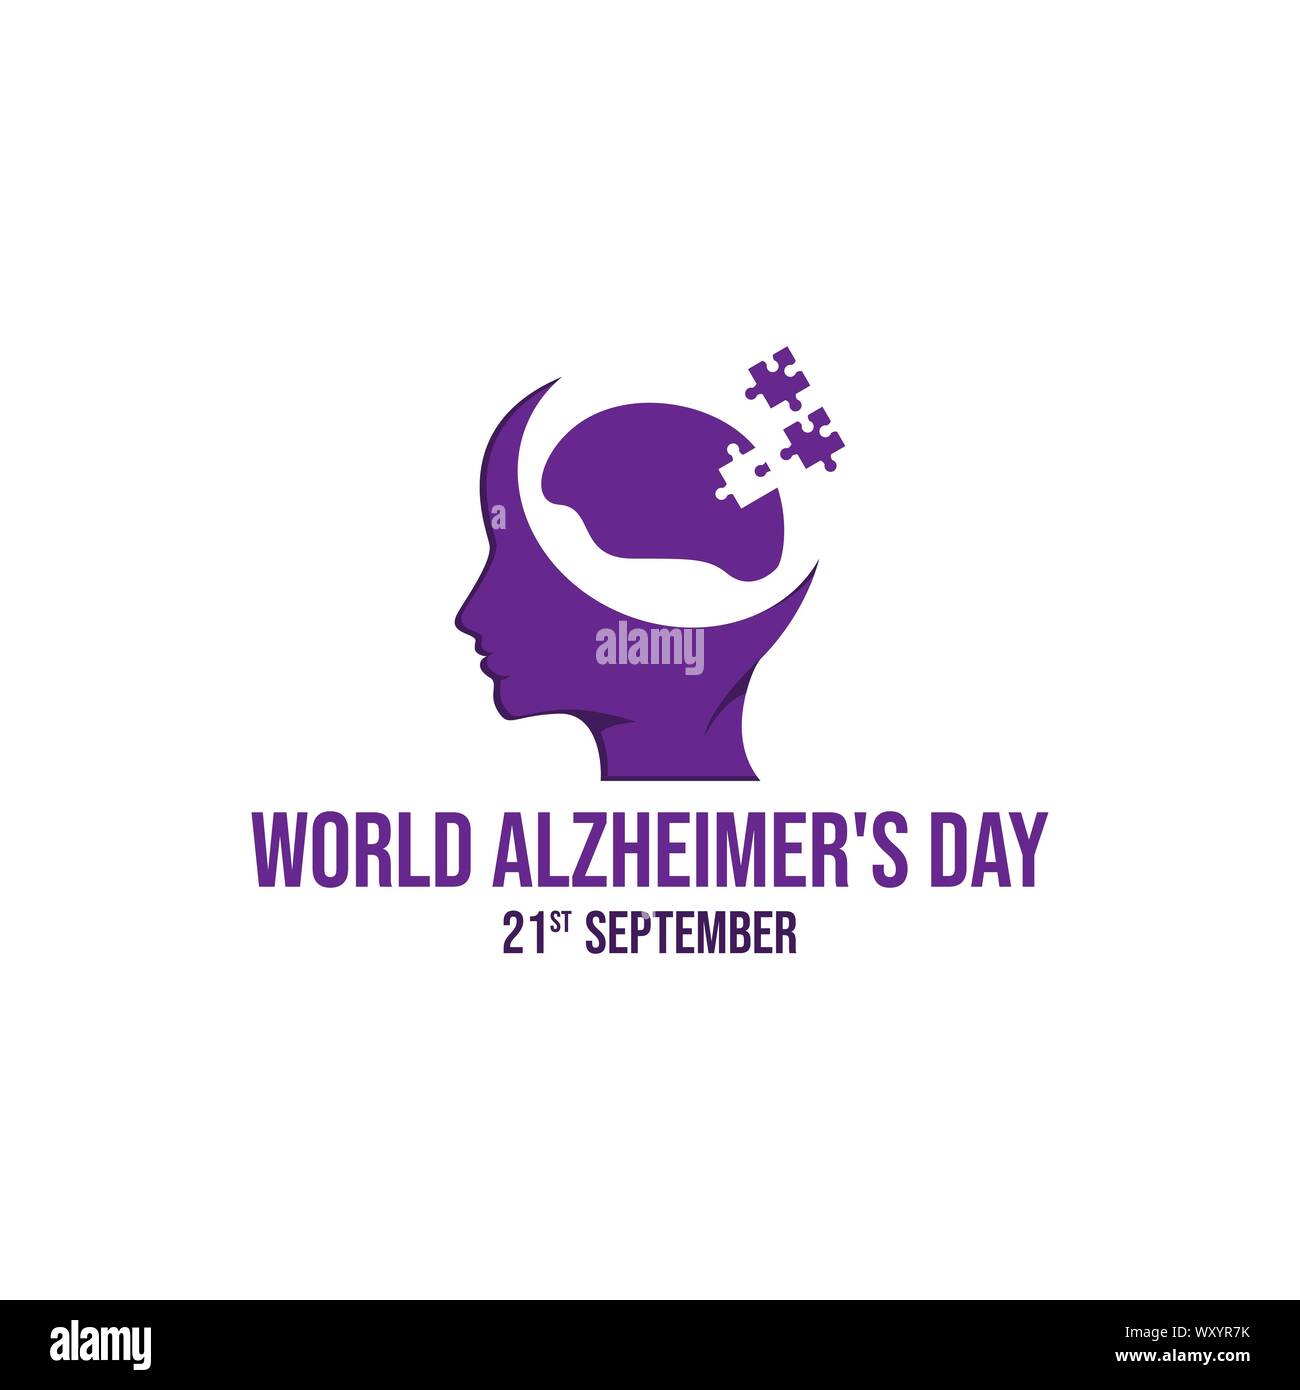 World Alzheimer's Day vector design template banner image Stock Vector